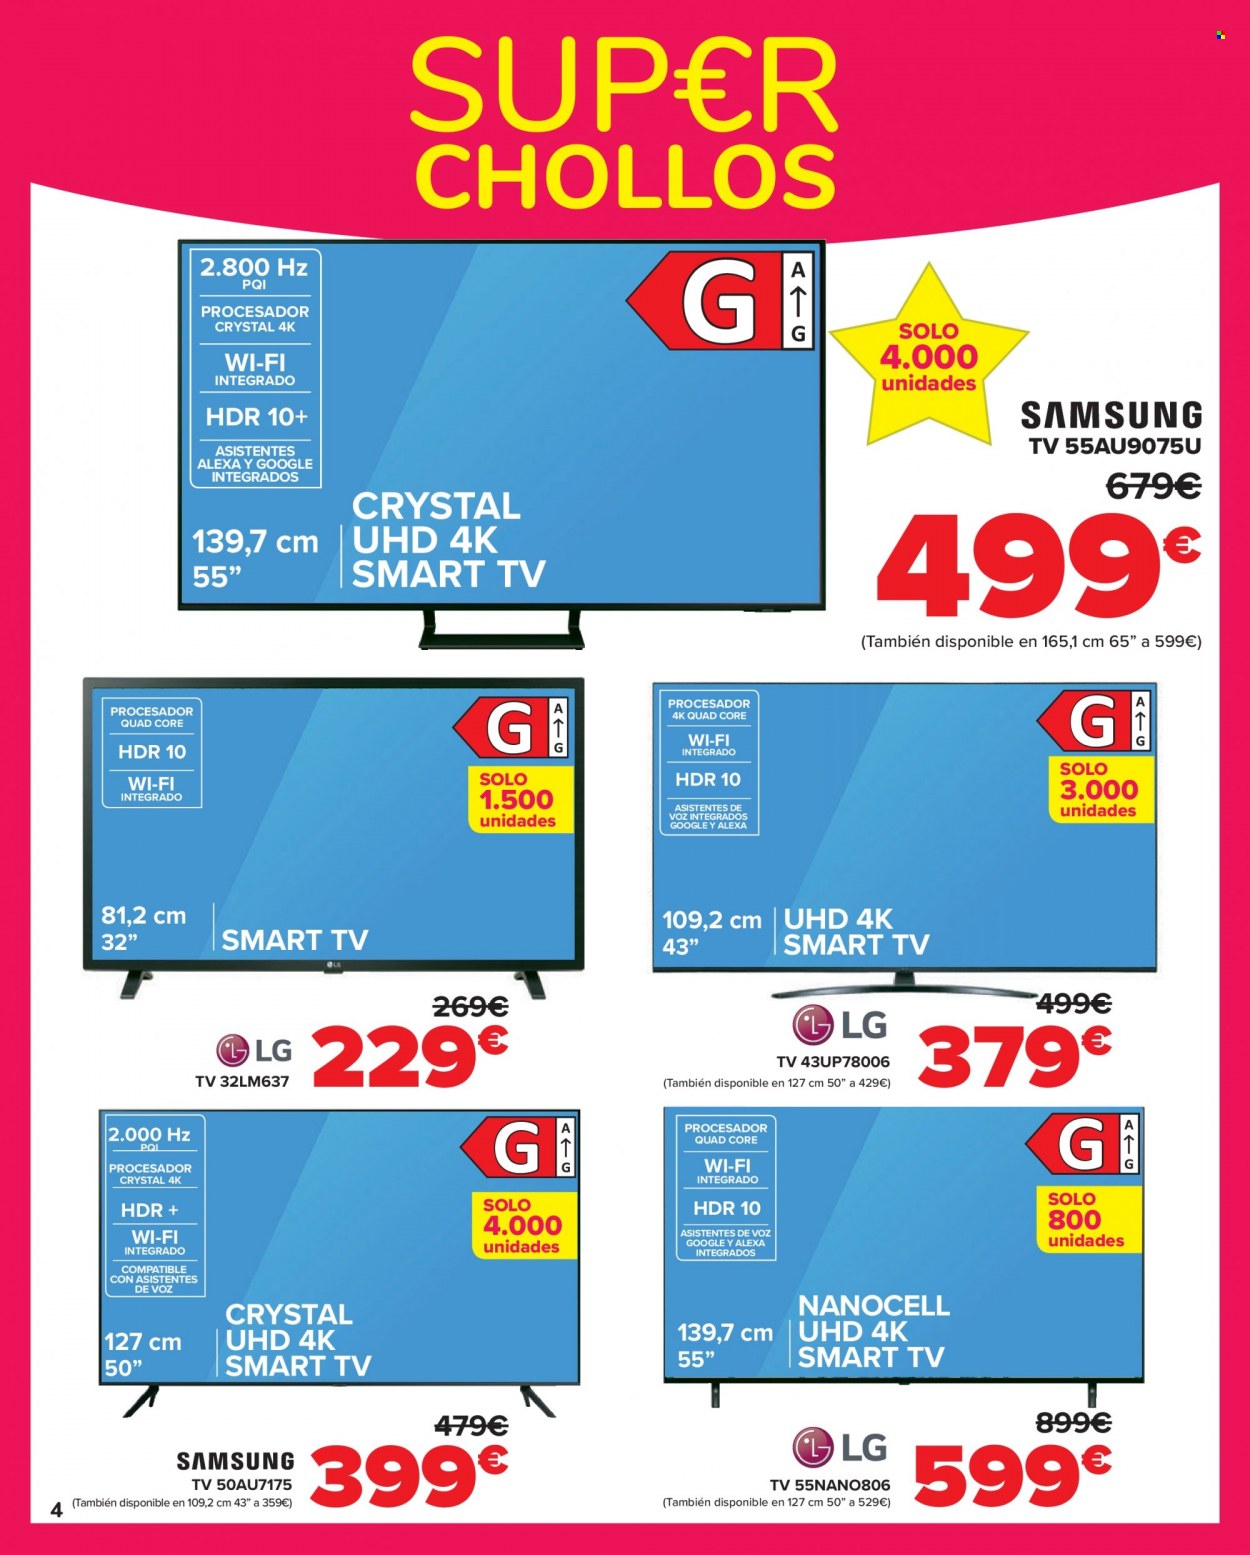 thumbnail - Folleto actual Carrefour - 11/05/22 - 24/05/22 - Ventas - LG, Samsung, Smart TV, televisor. Página 4.